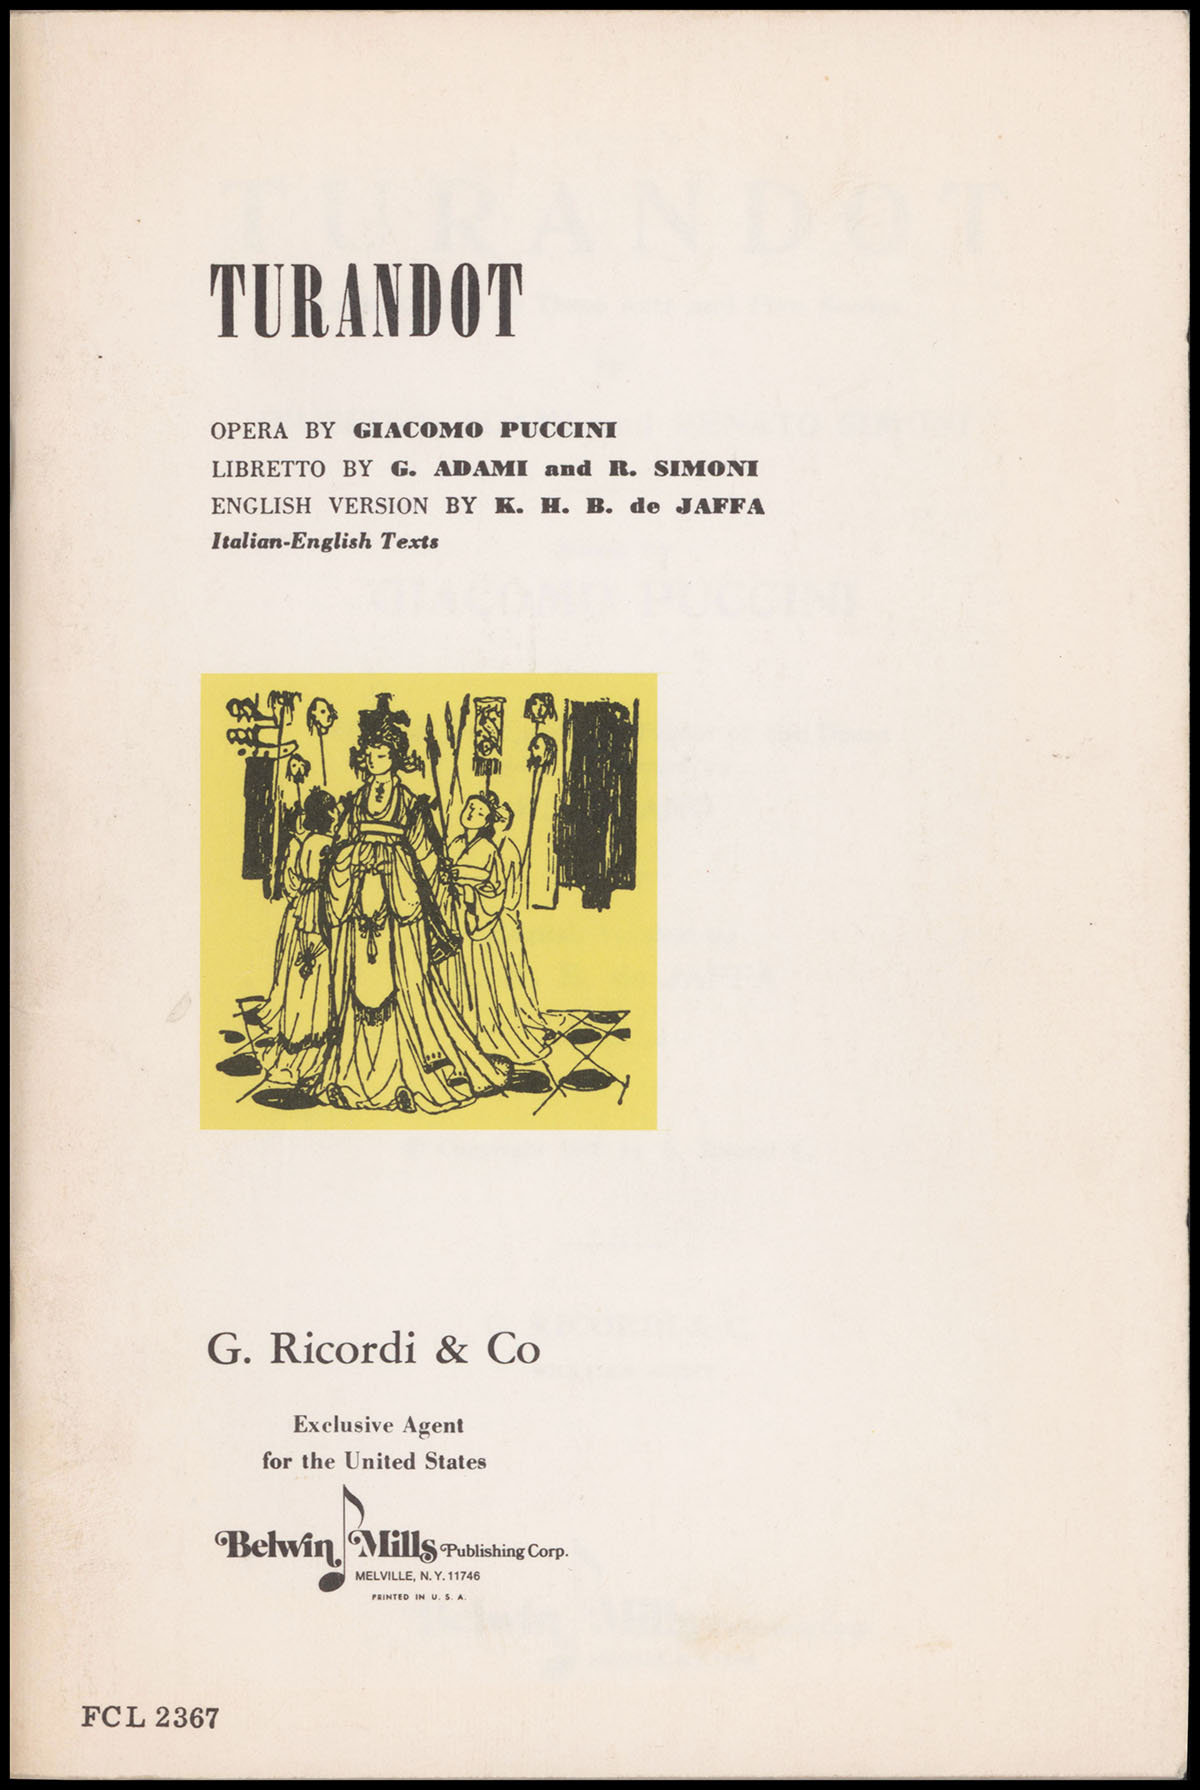 Adami, Giuseppe; Simoni, Renato - Turandot: Lyric Drama in Three Acts and Five Scenes